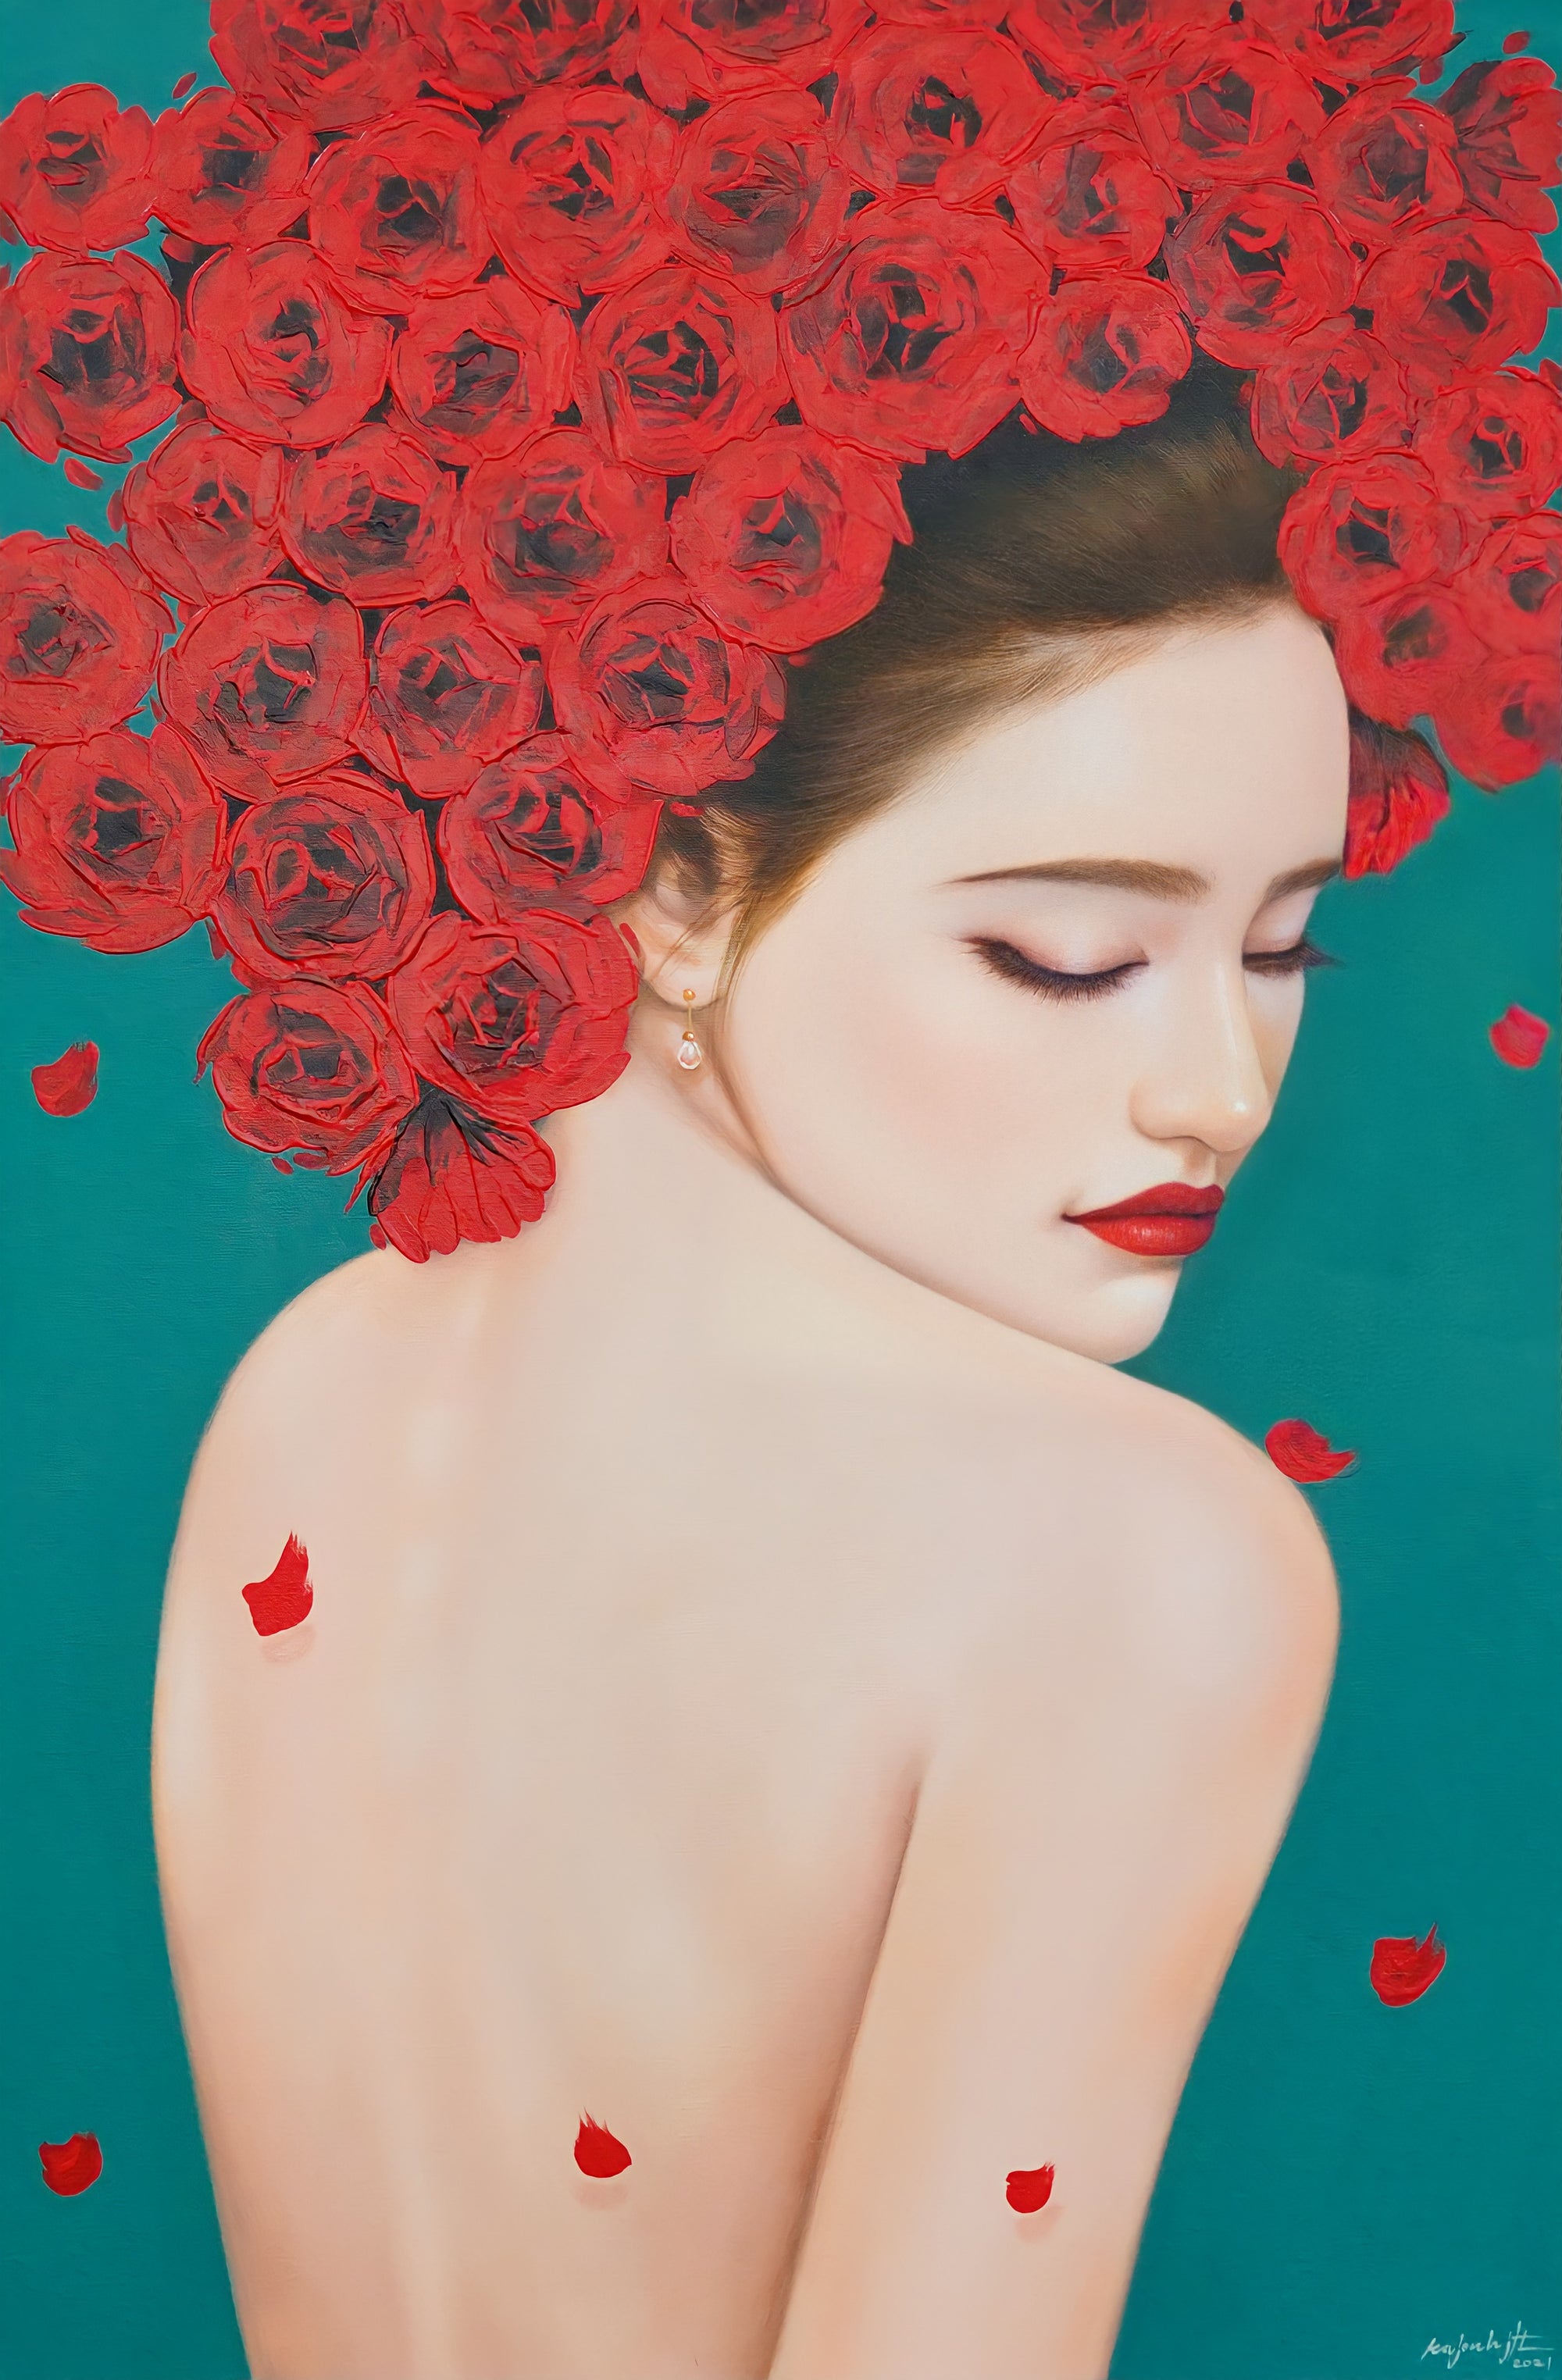 Femme fragile avec des roses - 60 X 90 cm